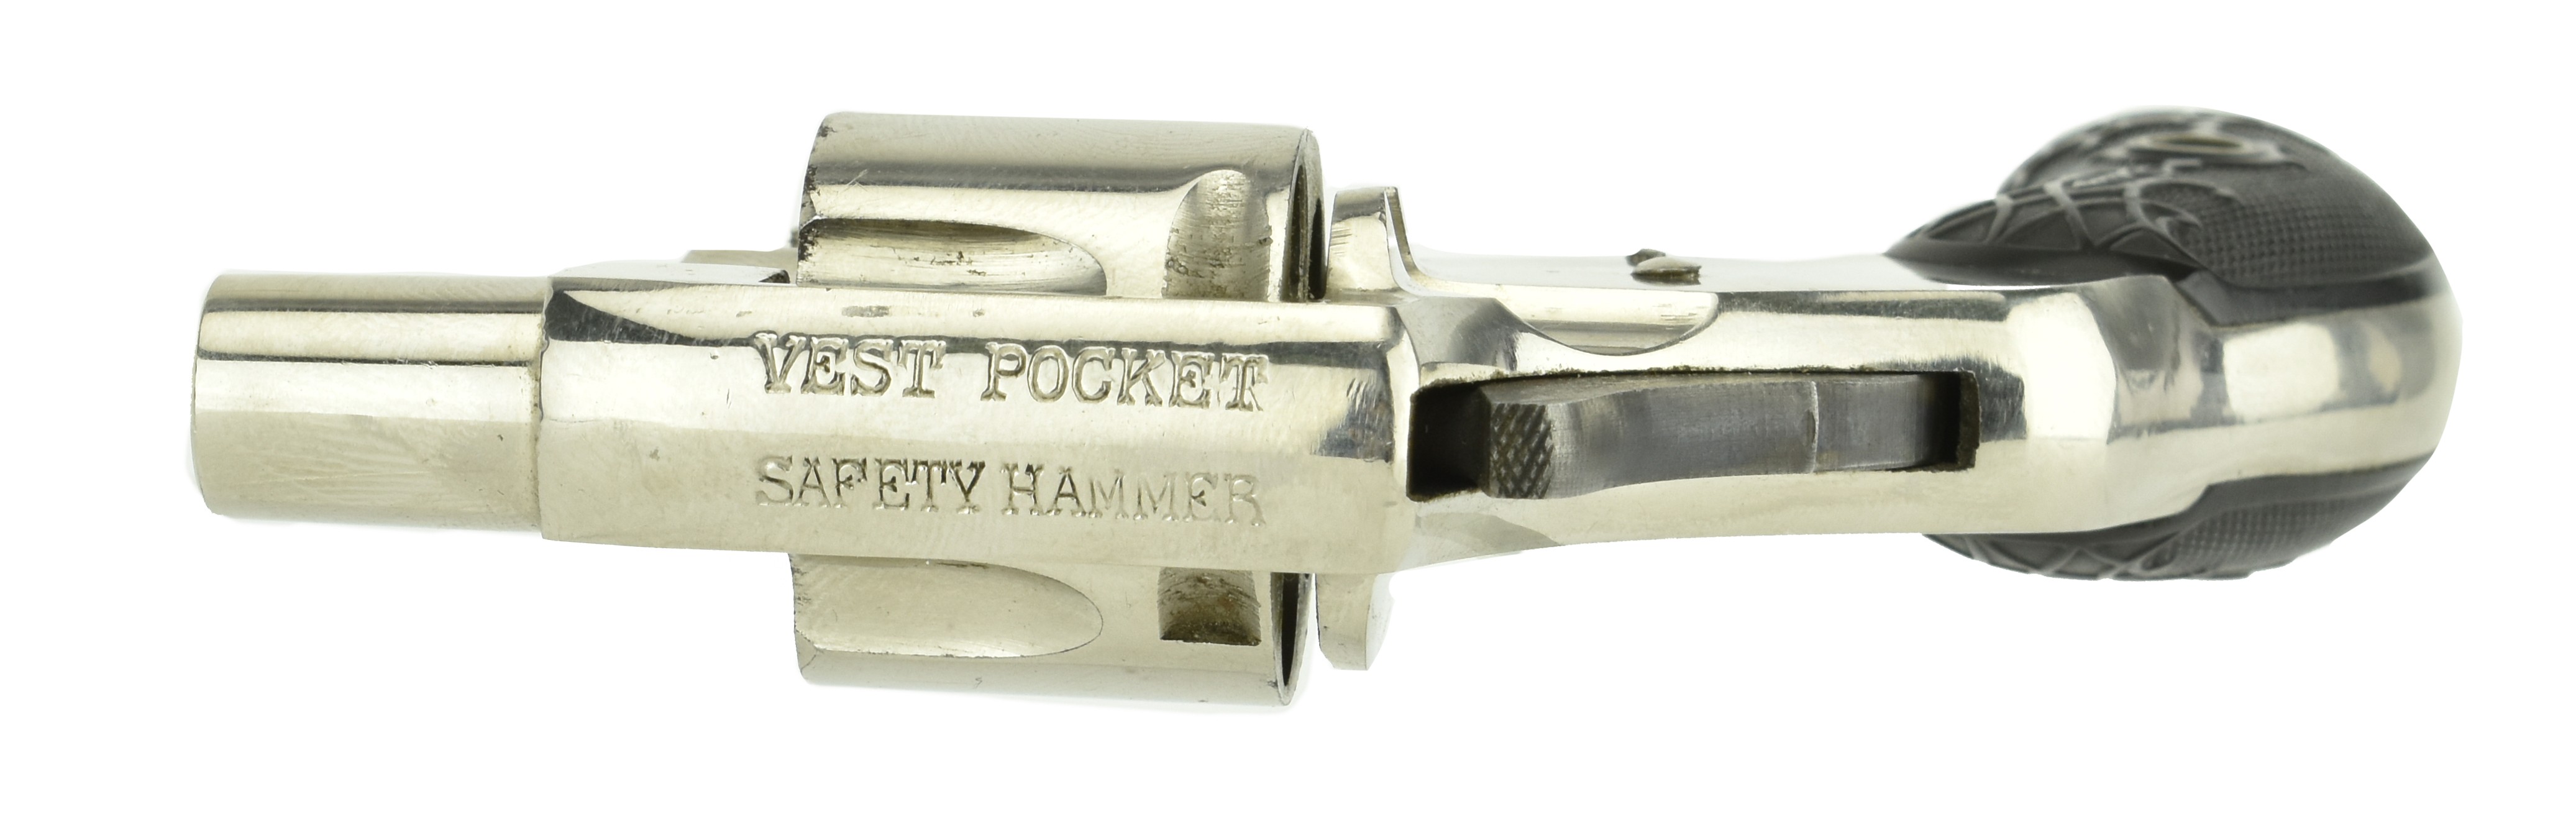 Harrington & Richardson Vest Pocket Safety .32 ACP (PR49360)